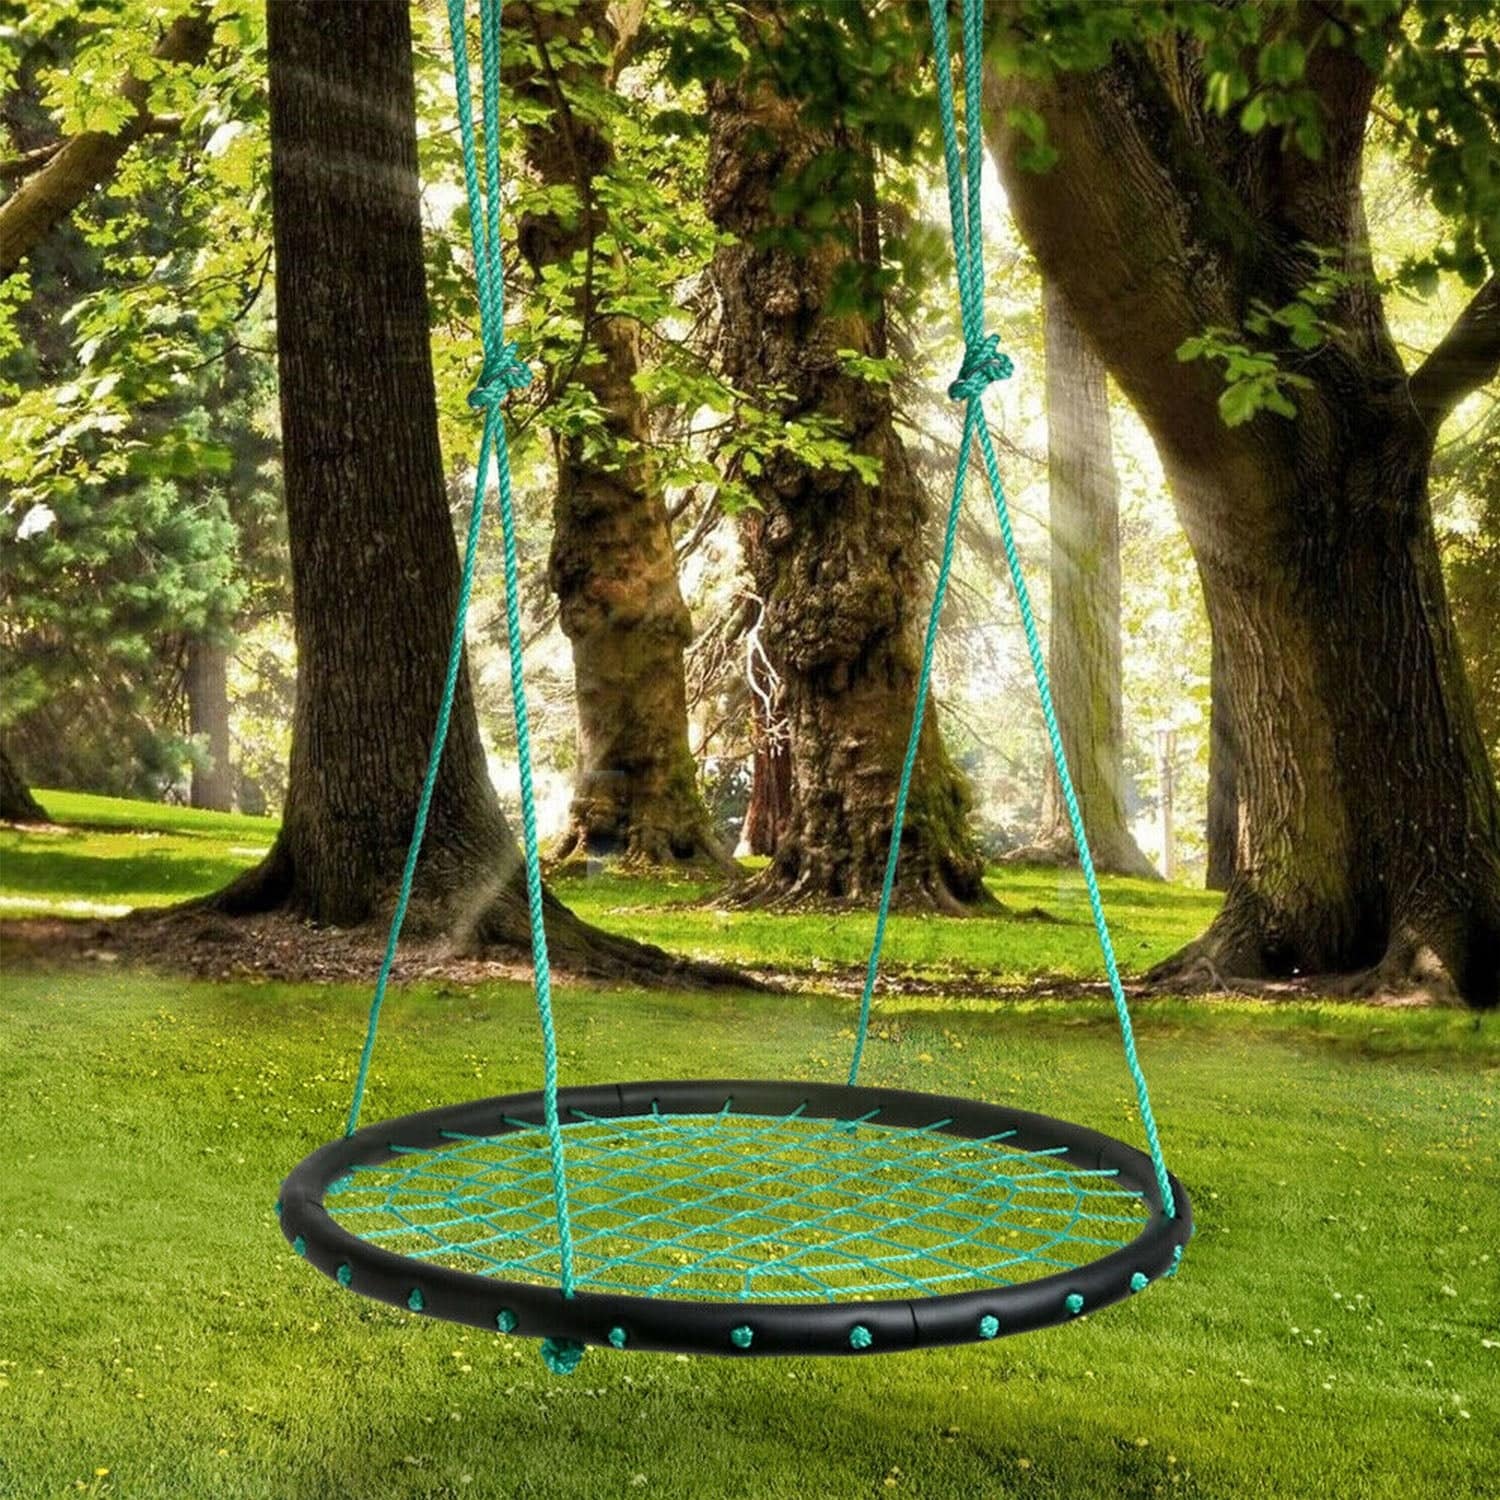 Green 40" Disc Swings Seat Flying Saucer Tree Rope Web Net Playground Backyard - Diameter 1 meter /40inch